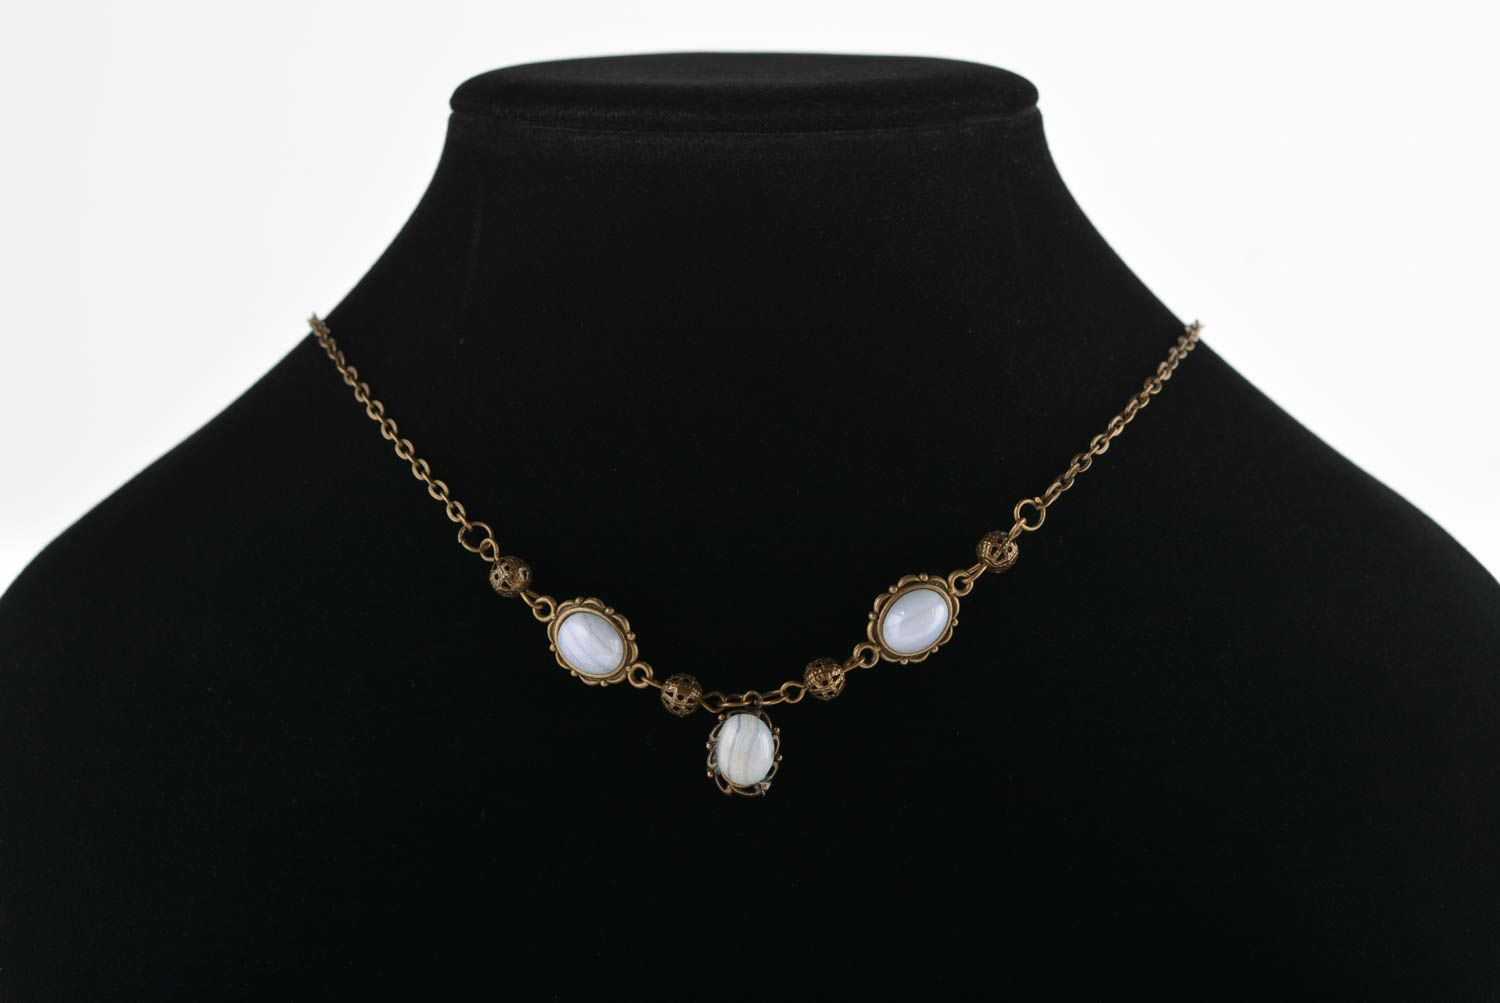 Beautiful handmade metal neck pendant stone pendant fashion accessories for girl photo 3